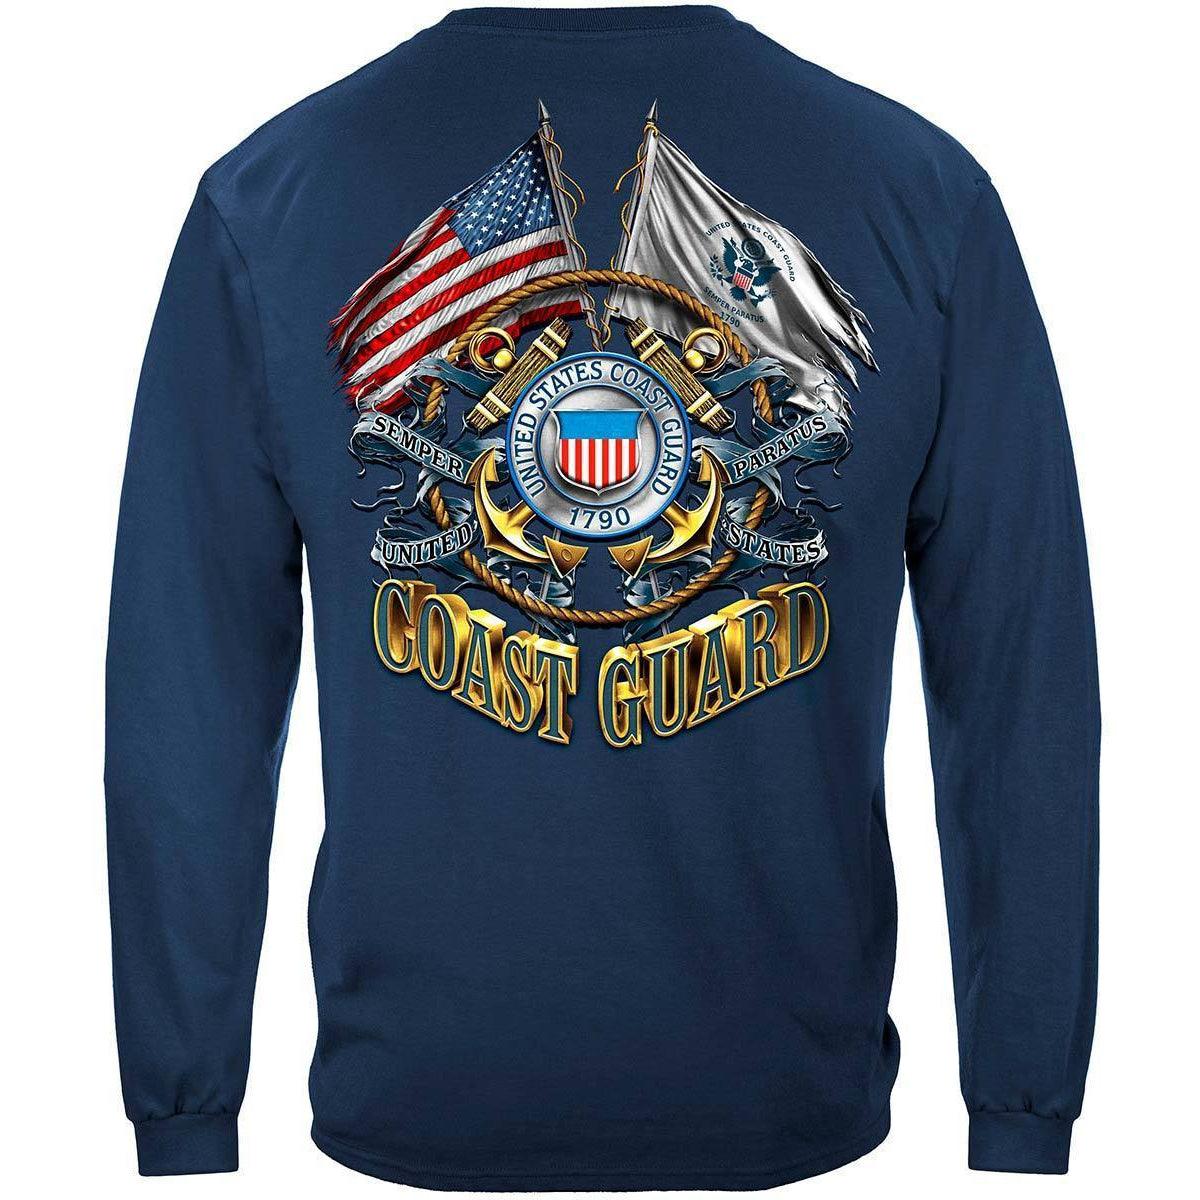 Double Flag Coast Guard Premium Long Sleeves - Military Republic